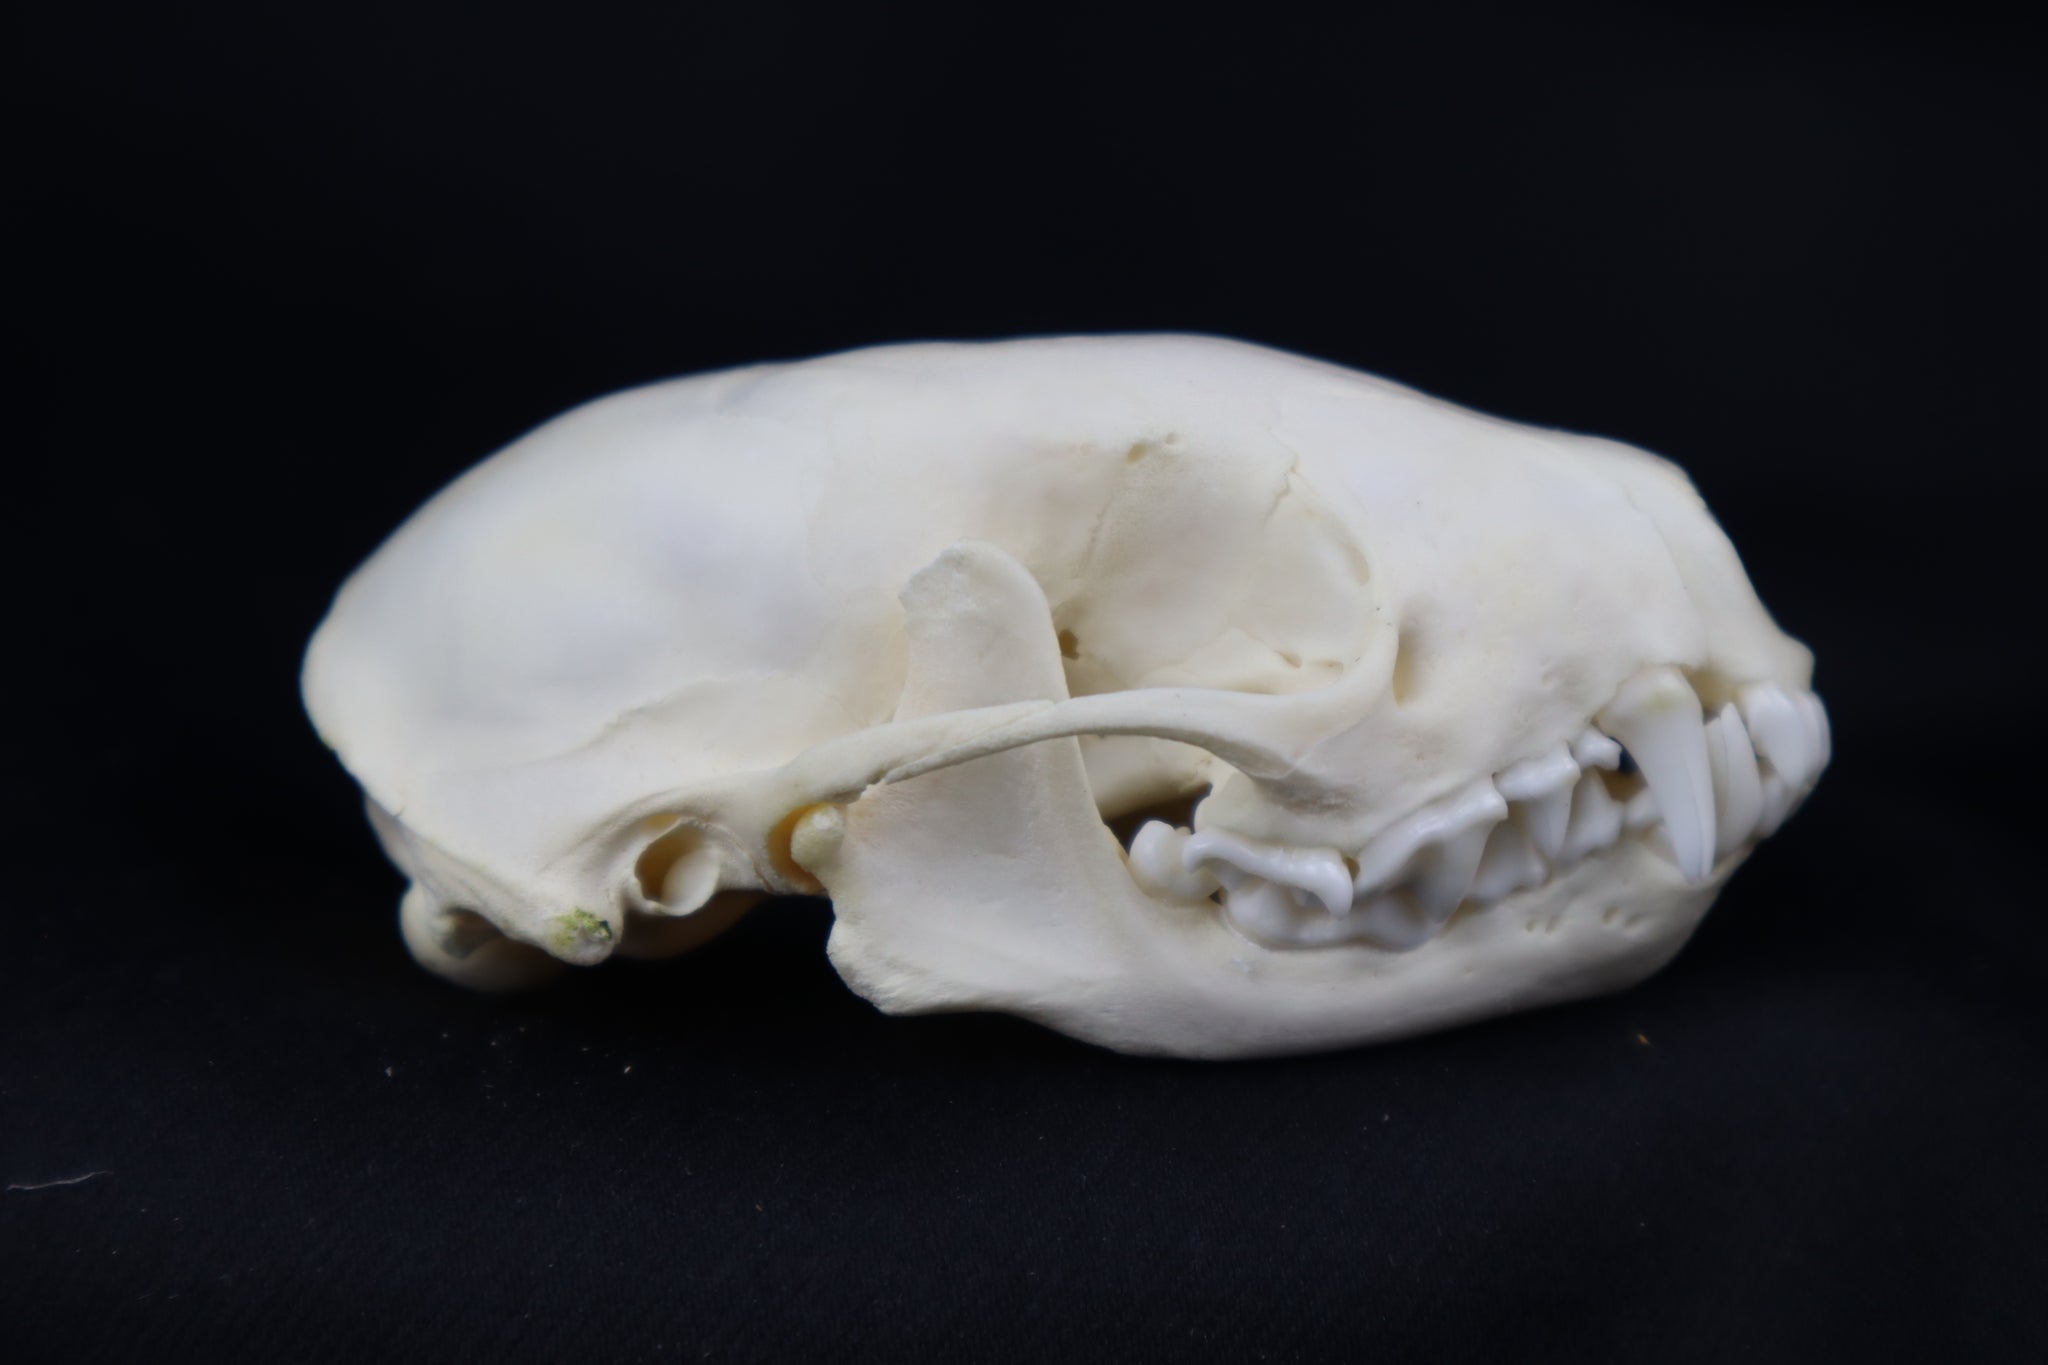 Juvenile Striped Skunk Skull